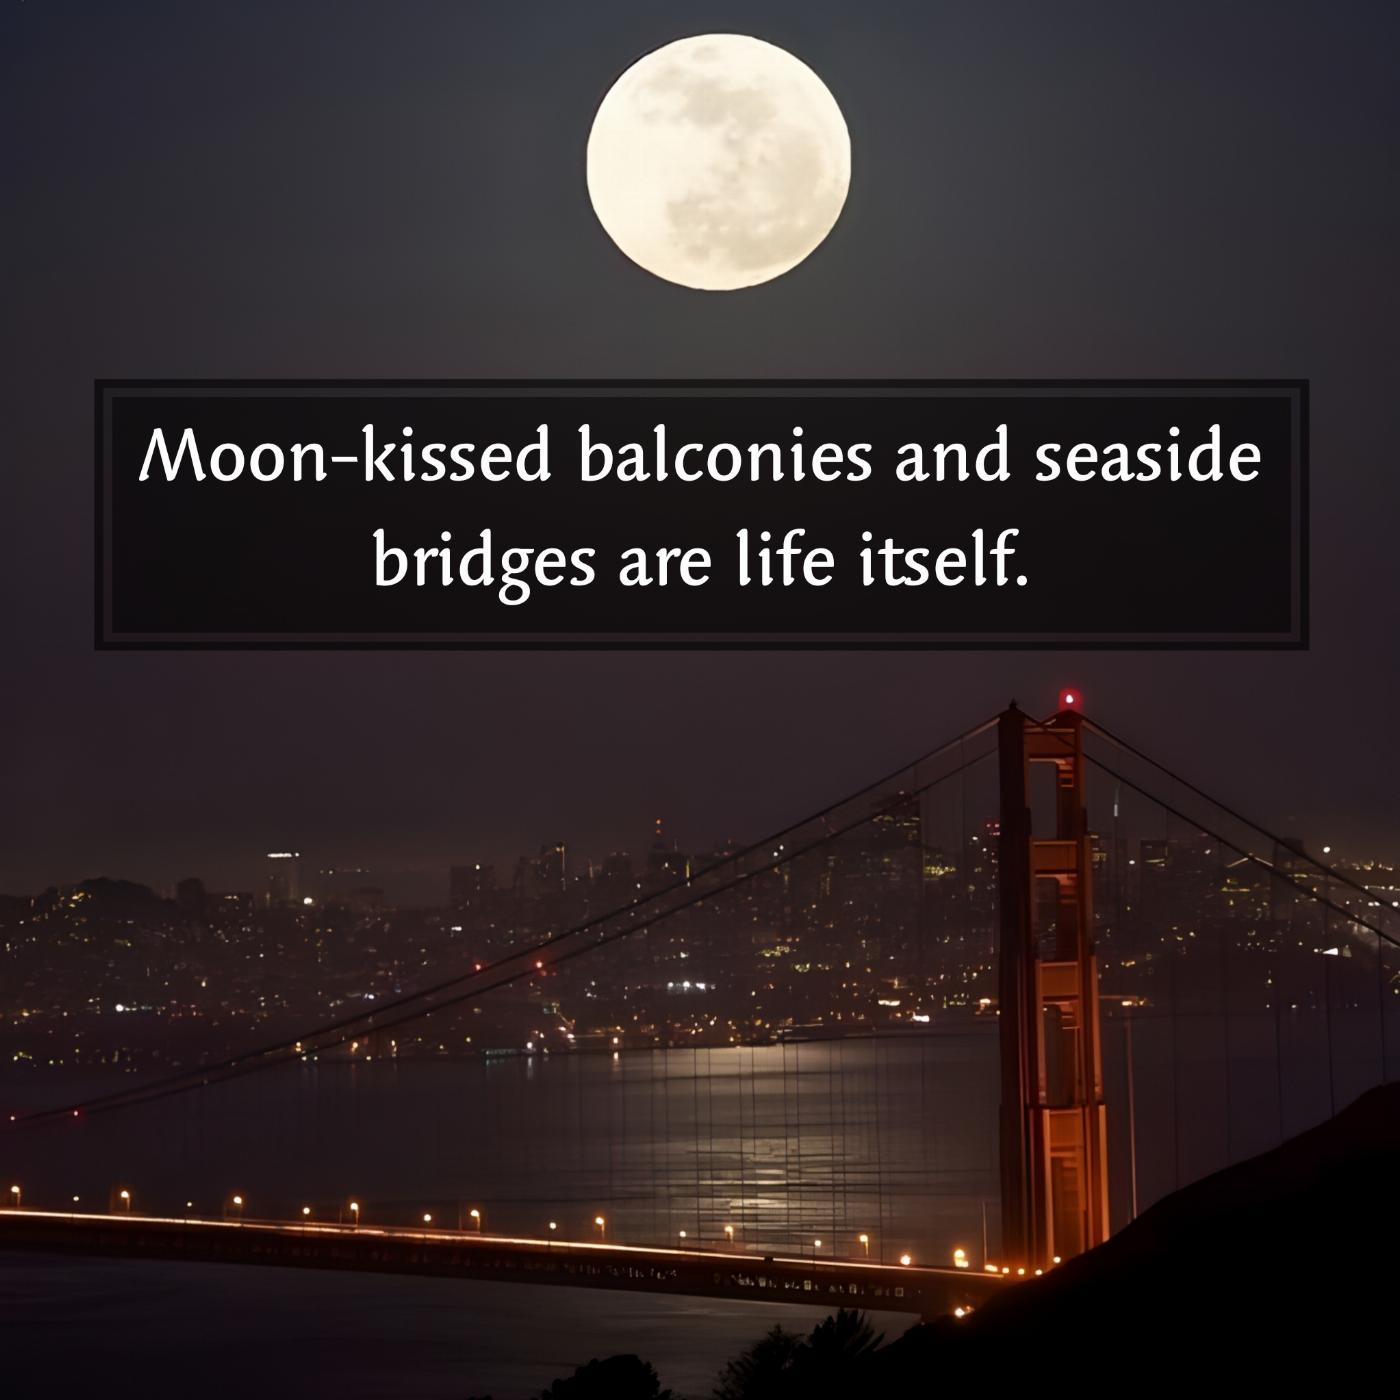 Moon-kissed balconies and seaside bridges are life itself